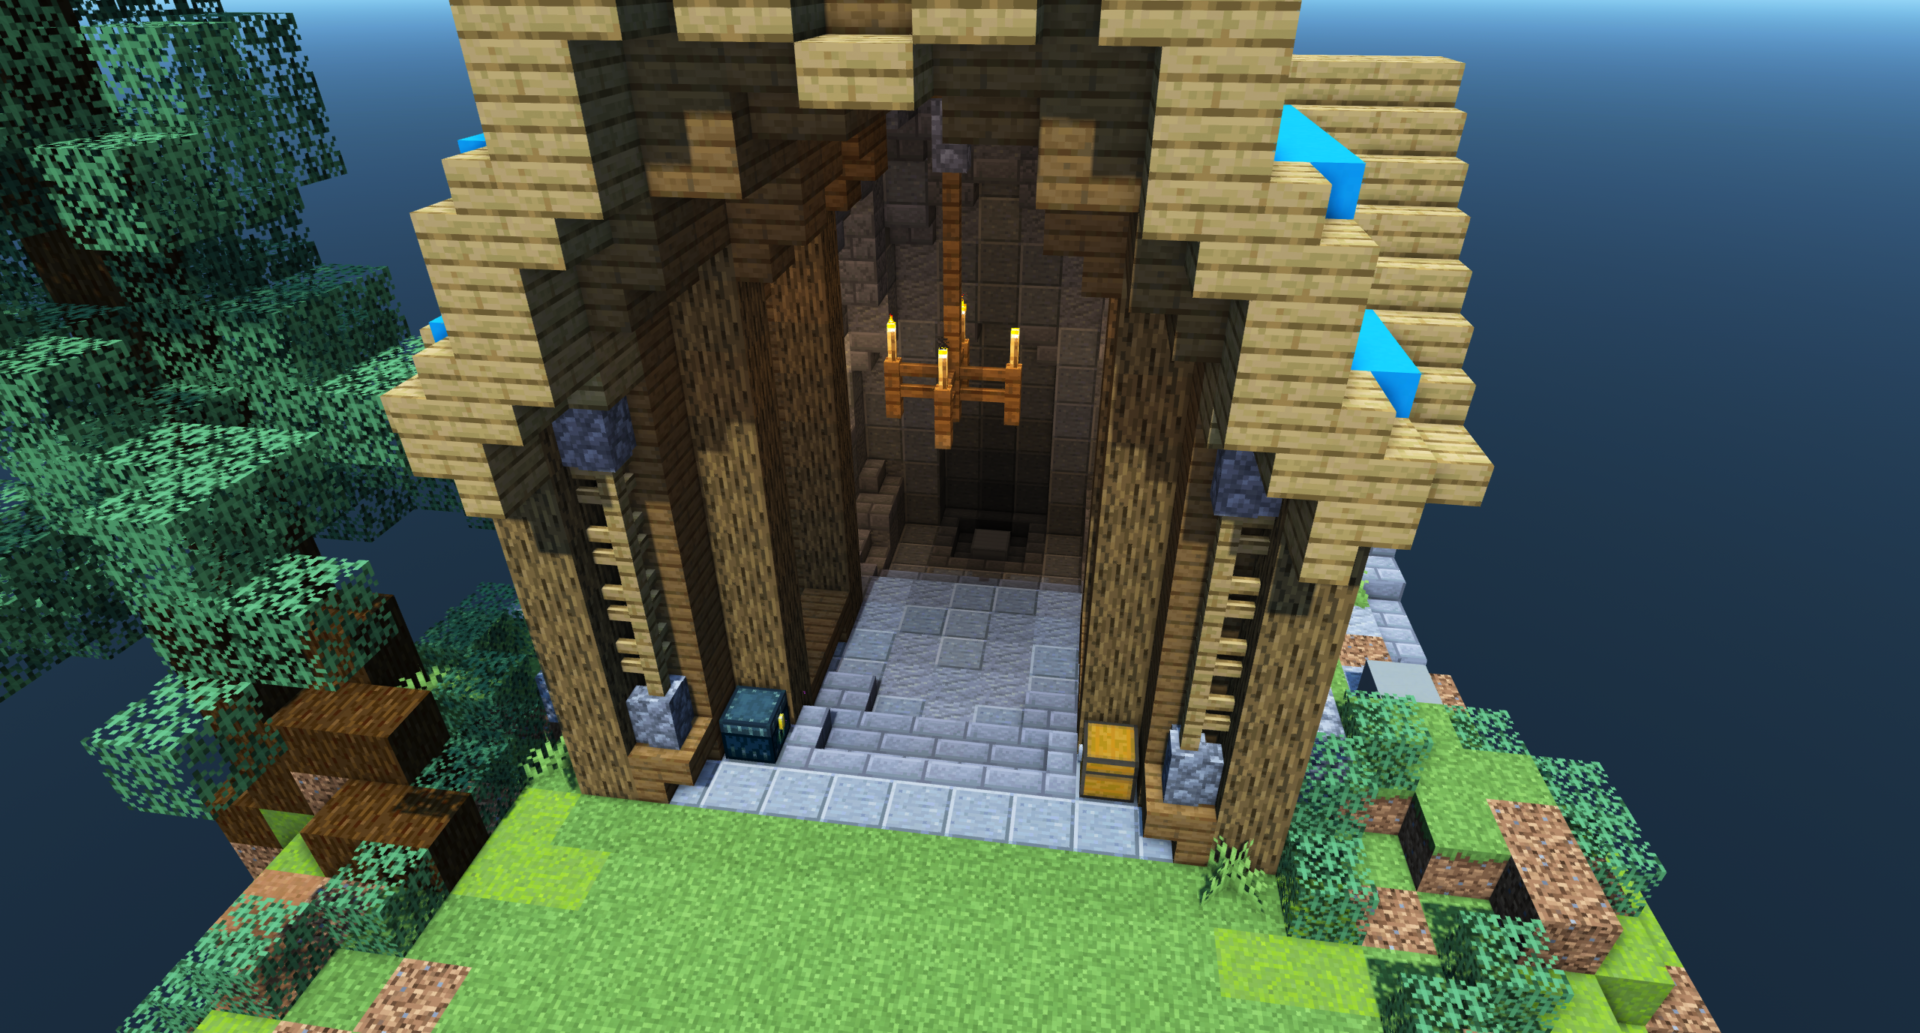 BUILDING A CASTLE IN BEDWARS! - Minecraft Bedwars Montage 